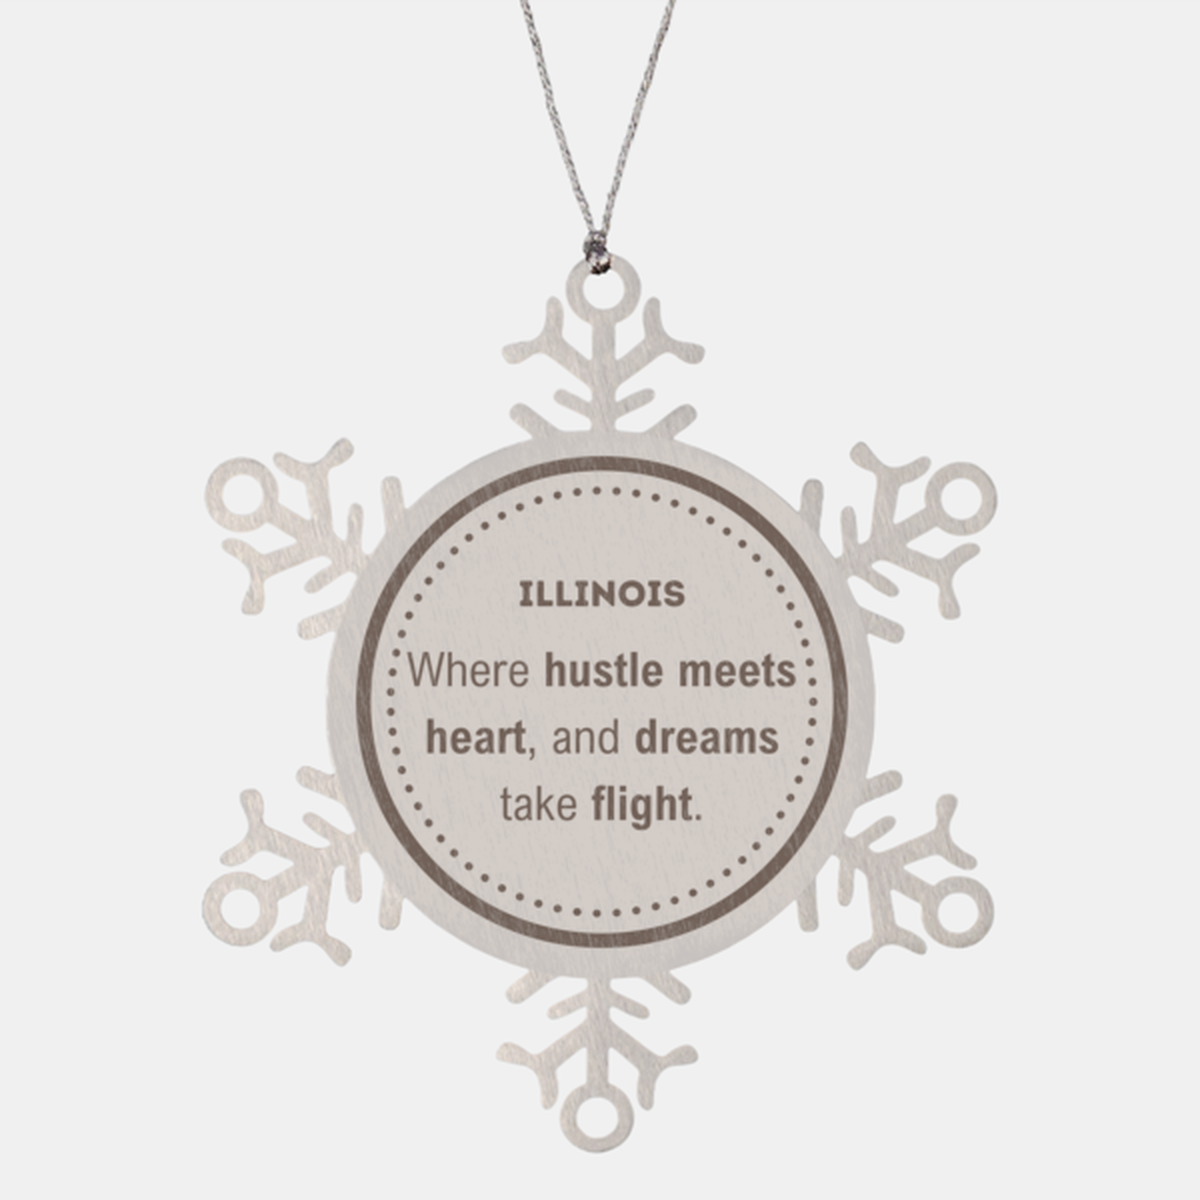 Illinois: Where hustle meets heart, and dreams take flight, Illinois Ornament Gifts, Proud Illinois Christmas Illinois Snowflake Ornament, Illinois State People, Men, Women, Friends